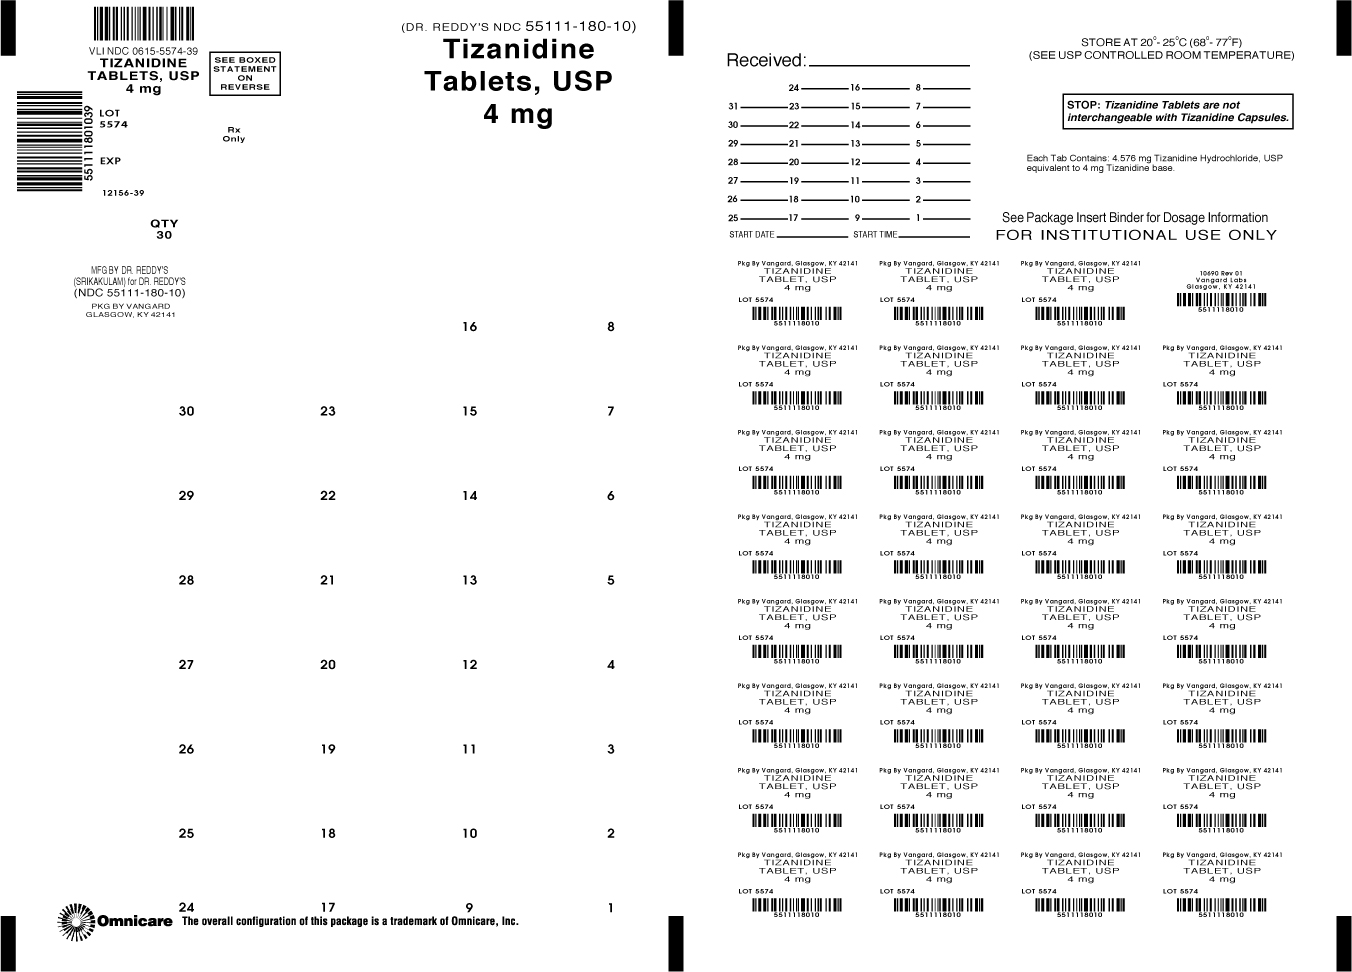 Tizanidine Tablets, USP 4mg bingo card label